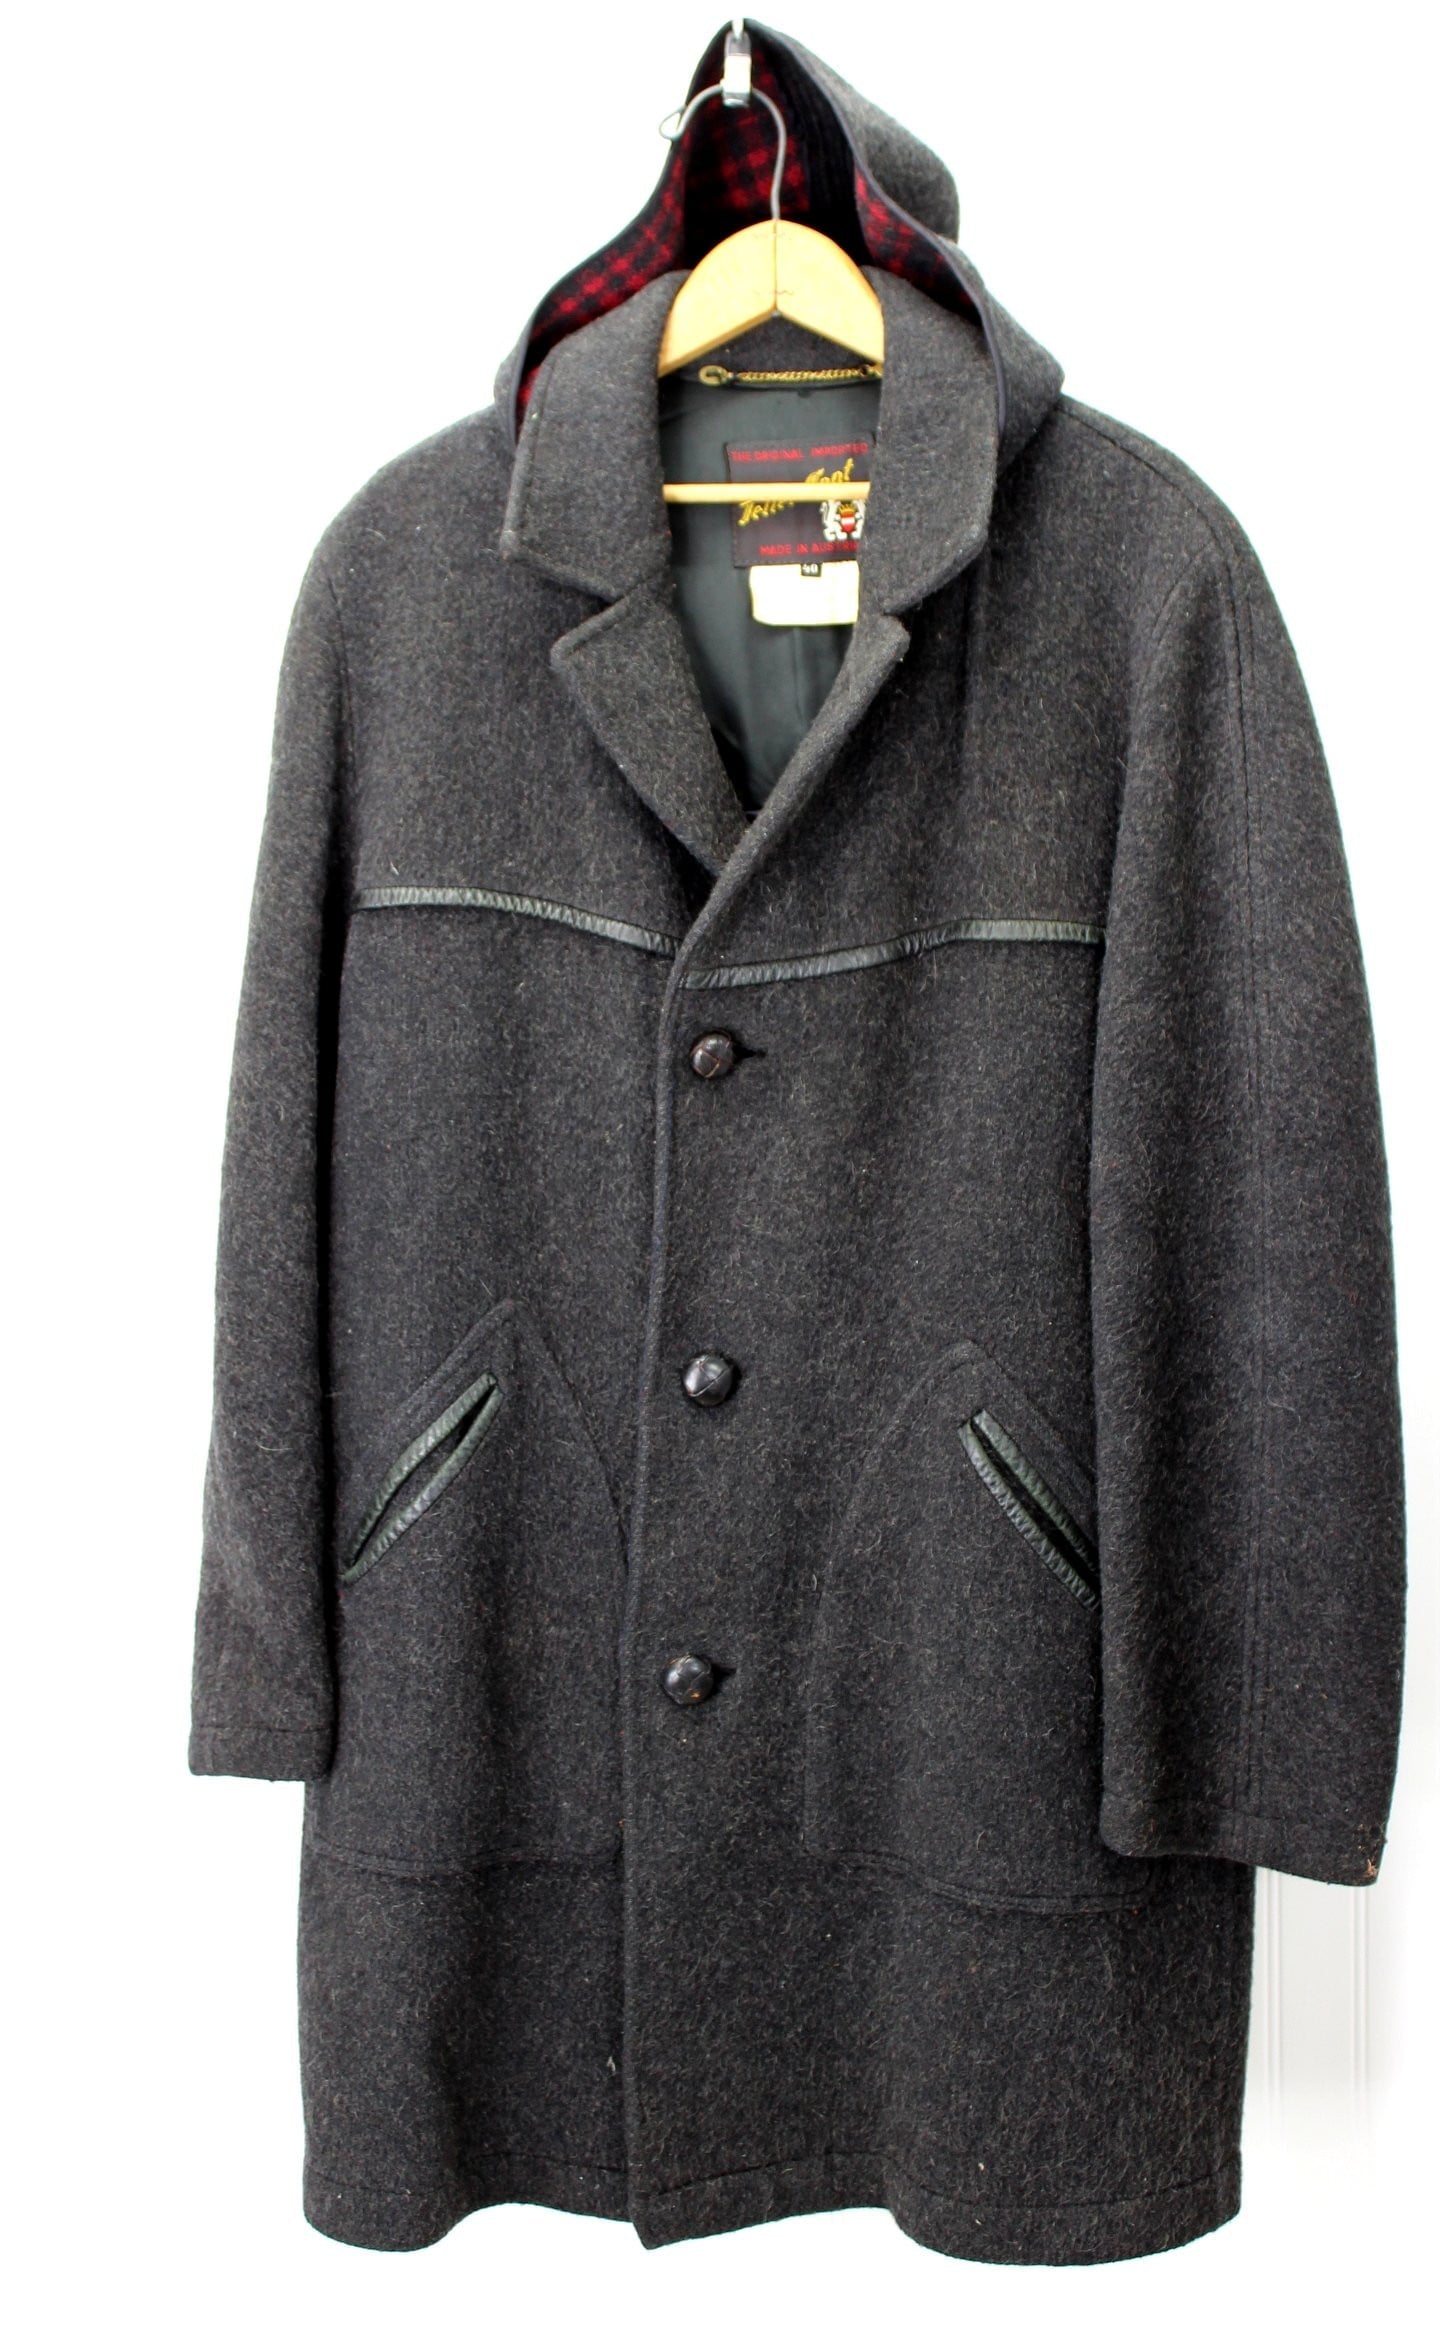 Teller Coat Austria Vintage 1960s Wool Car Coat - Fully Lined - Hood Buttons